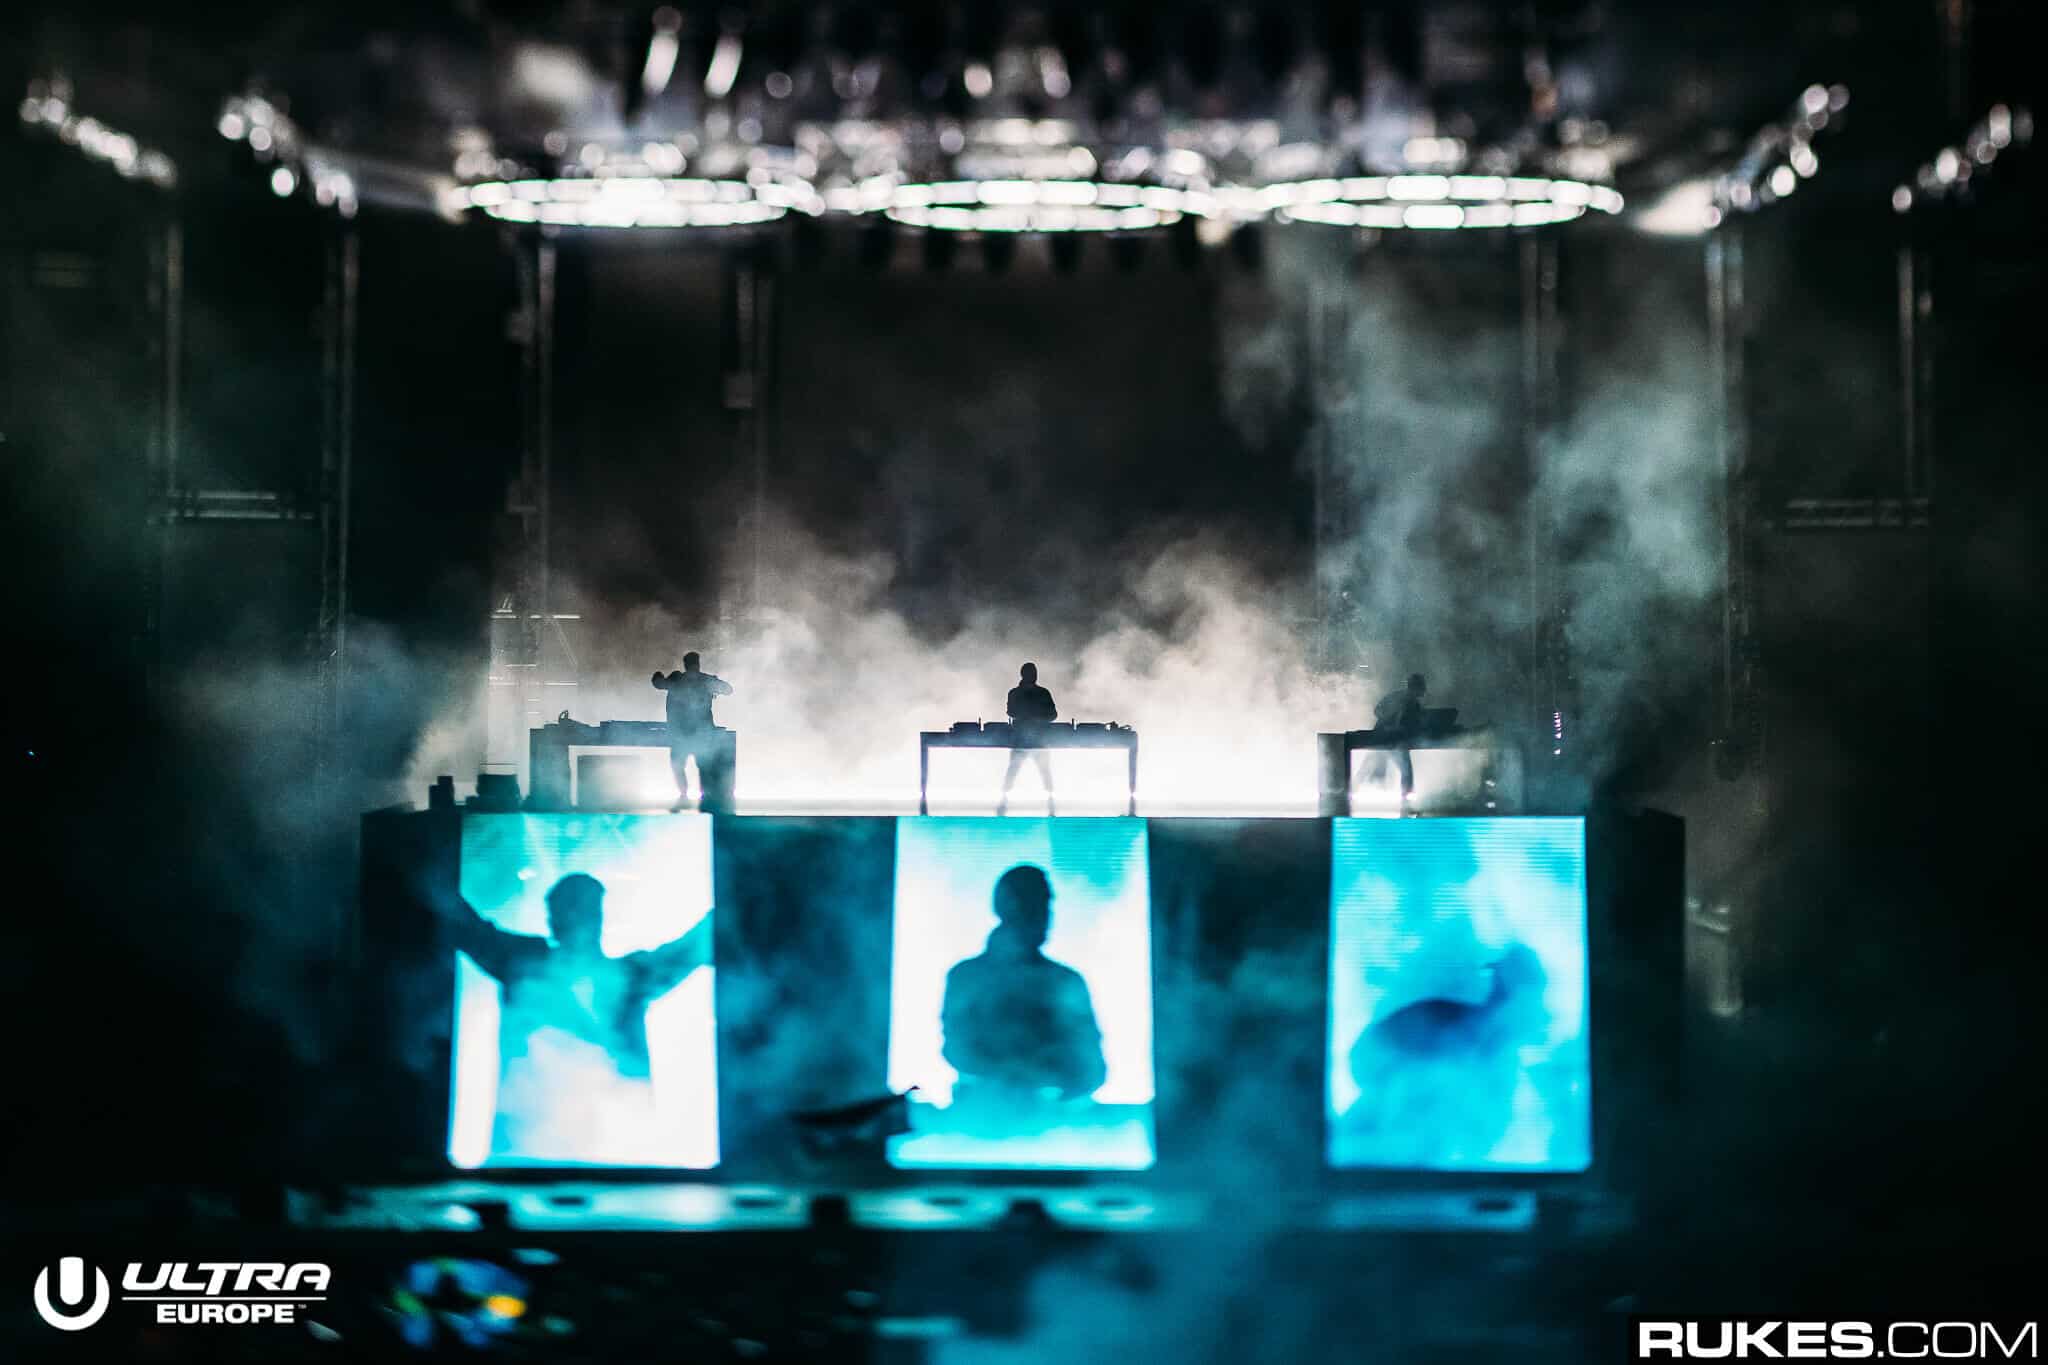 Swedish House Mafia at Ultra Europe 2019